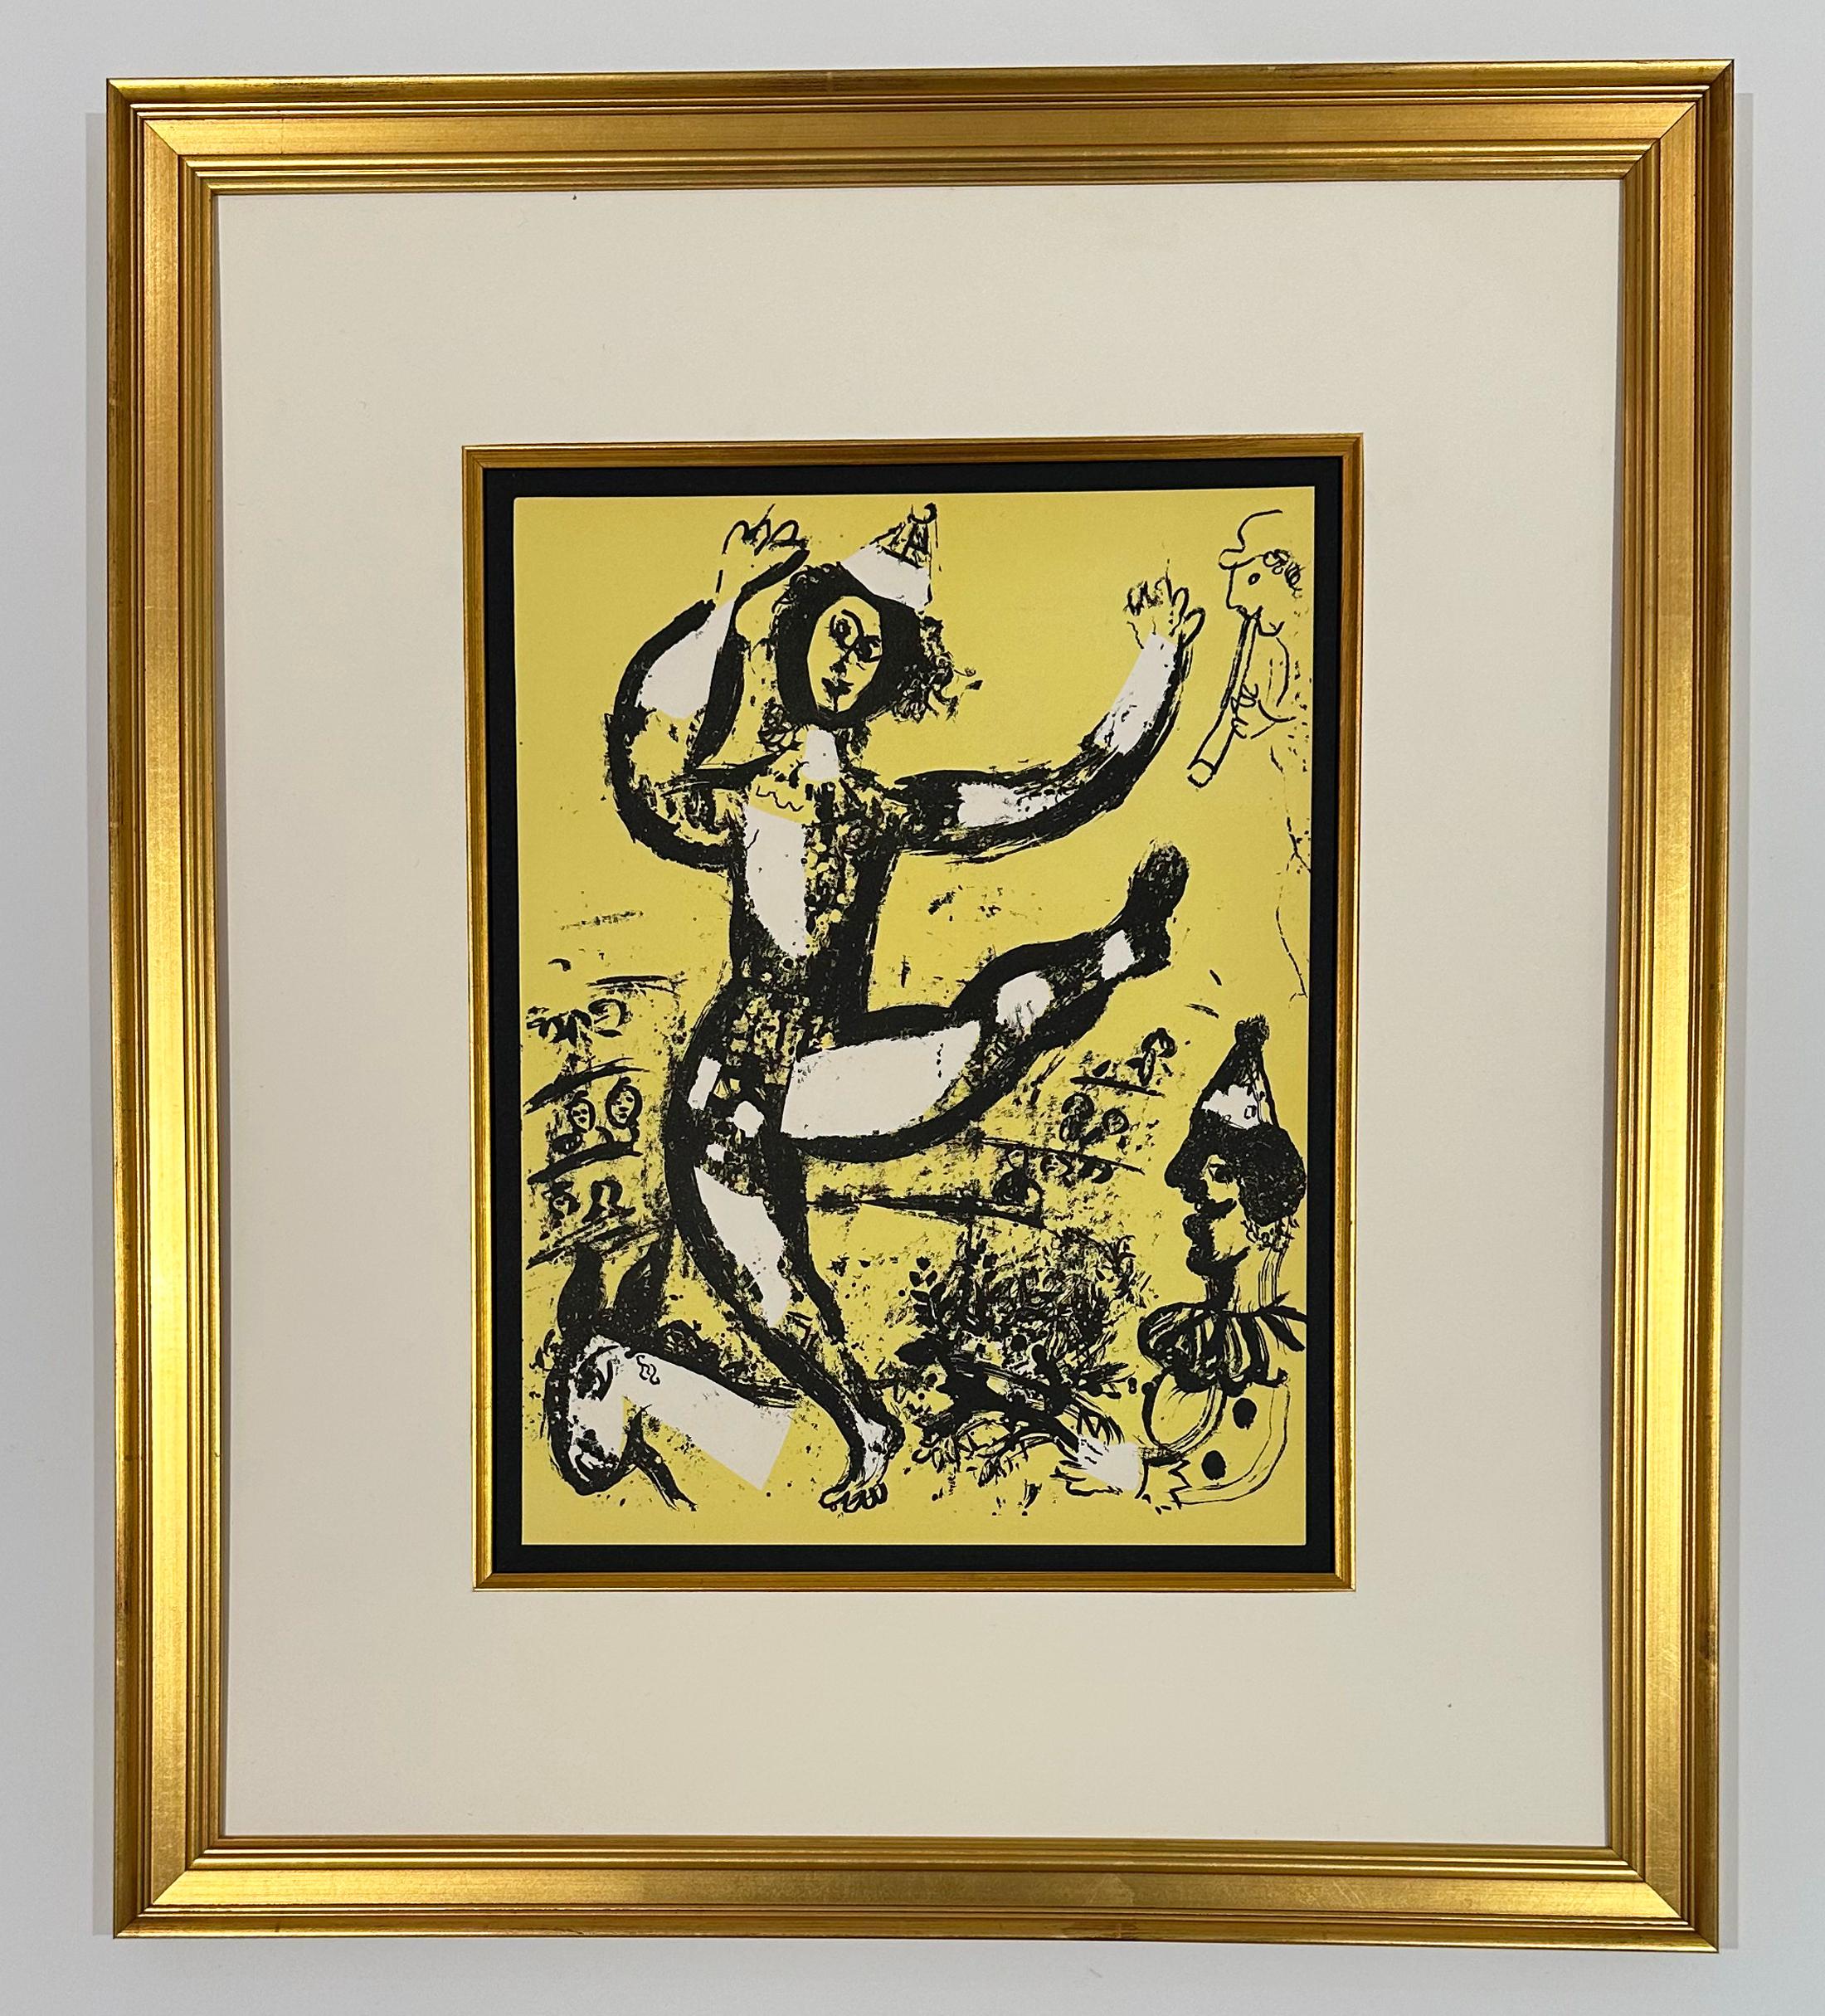 The Circus, von 1960, Mourlot-Lithographie I – Print von Marc Chagall